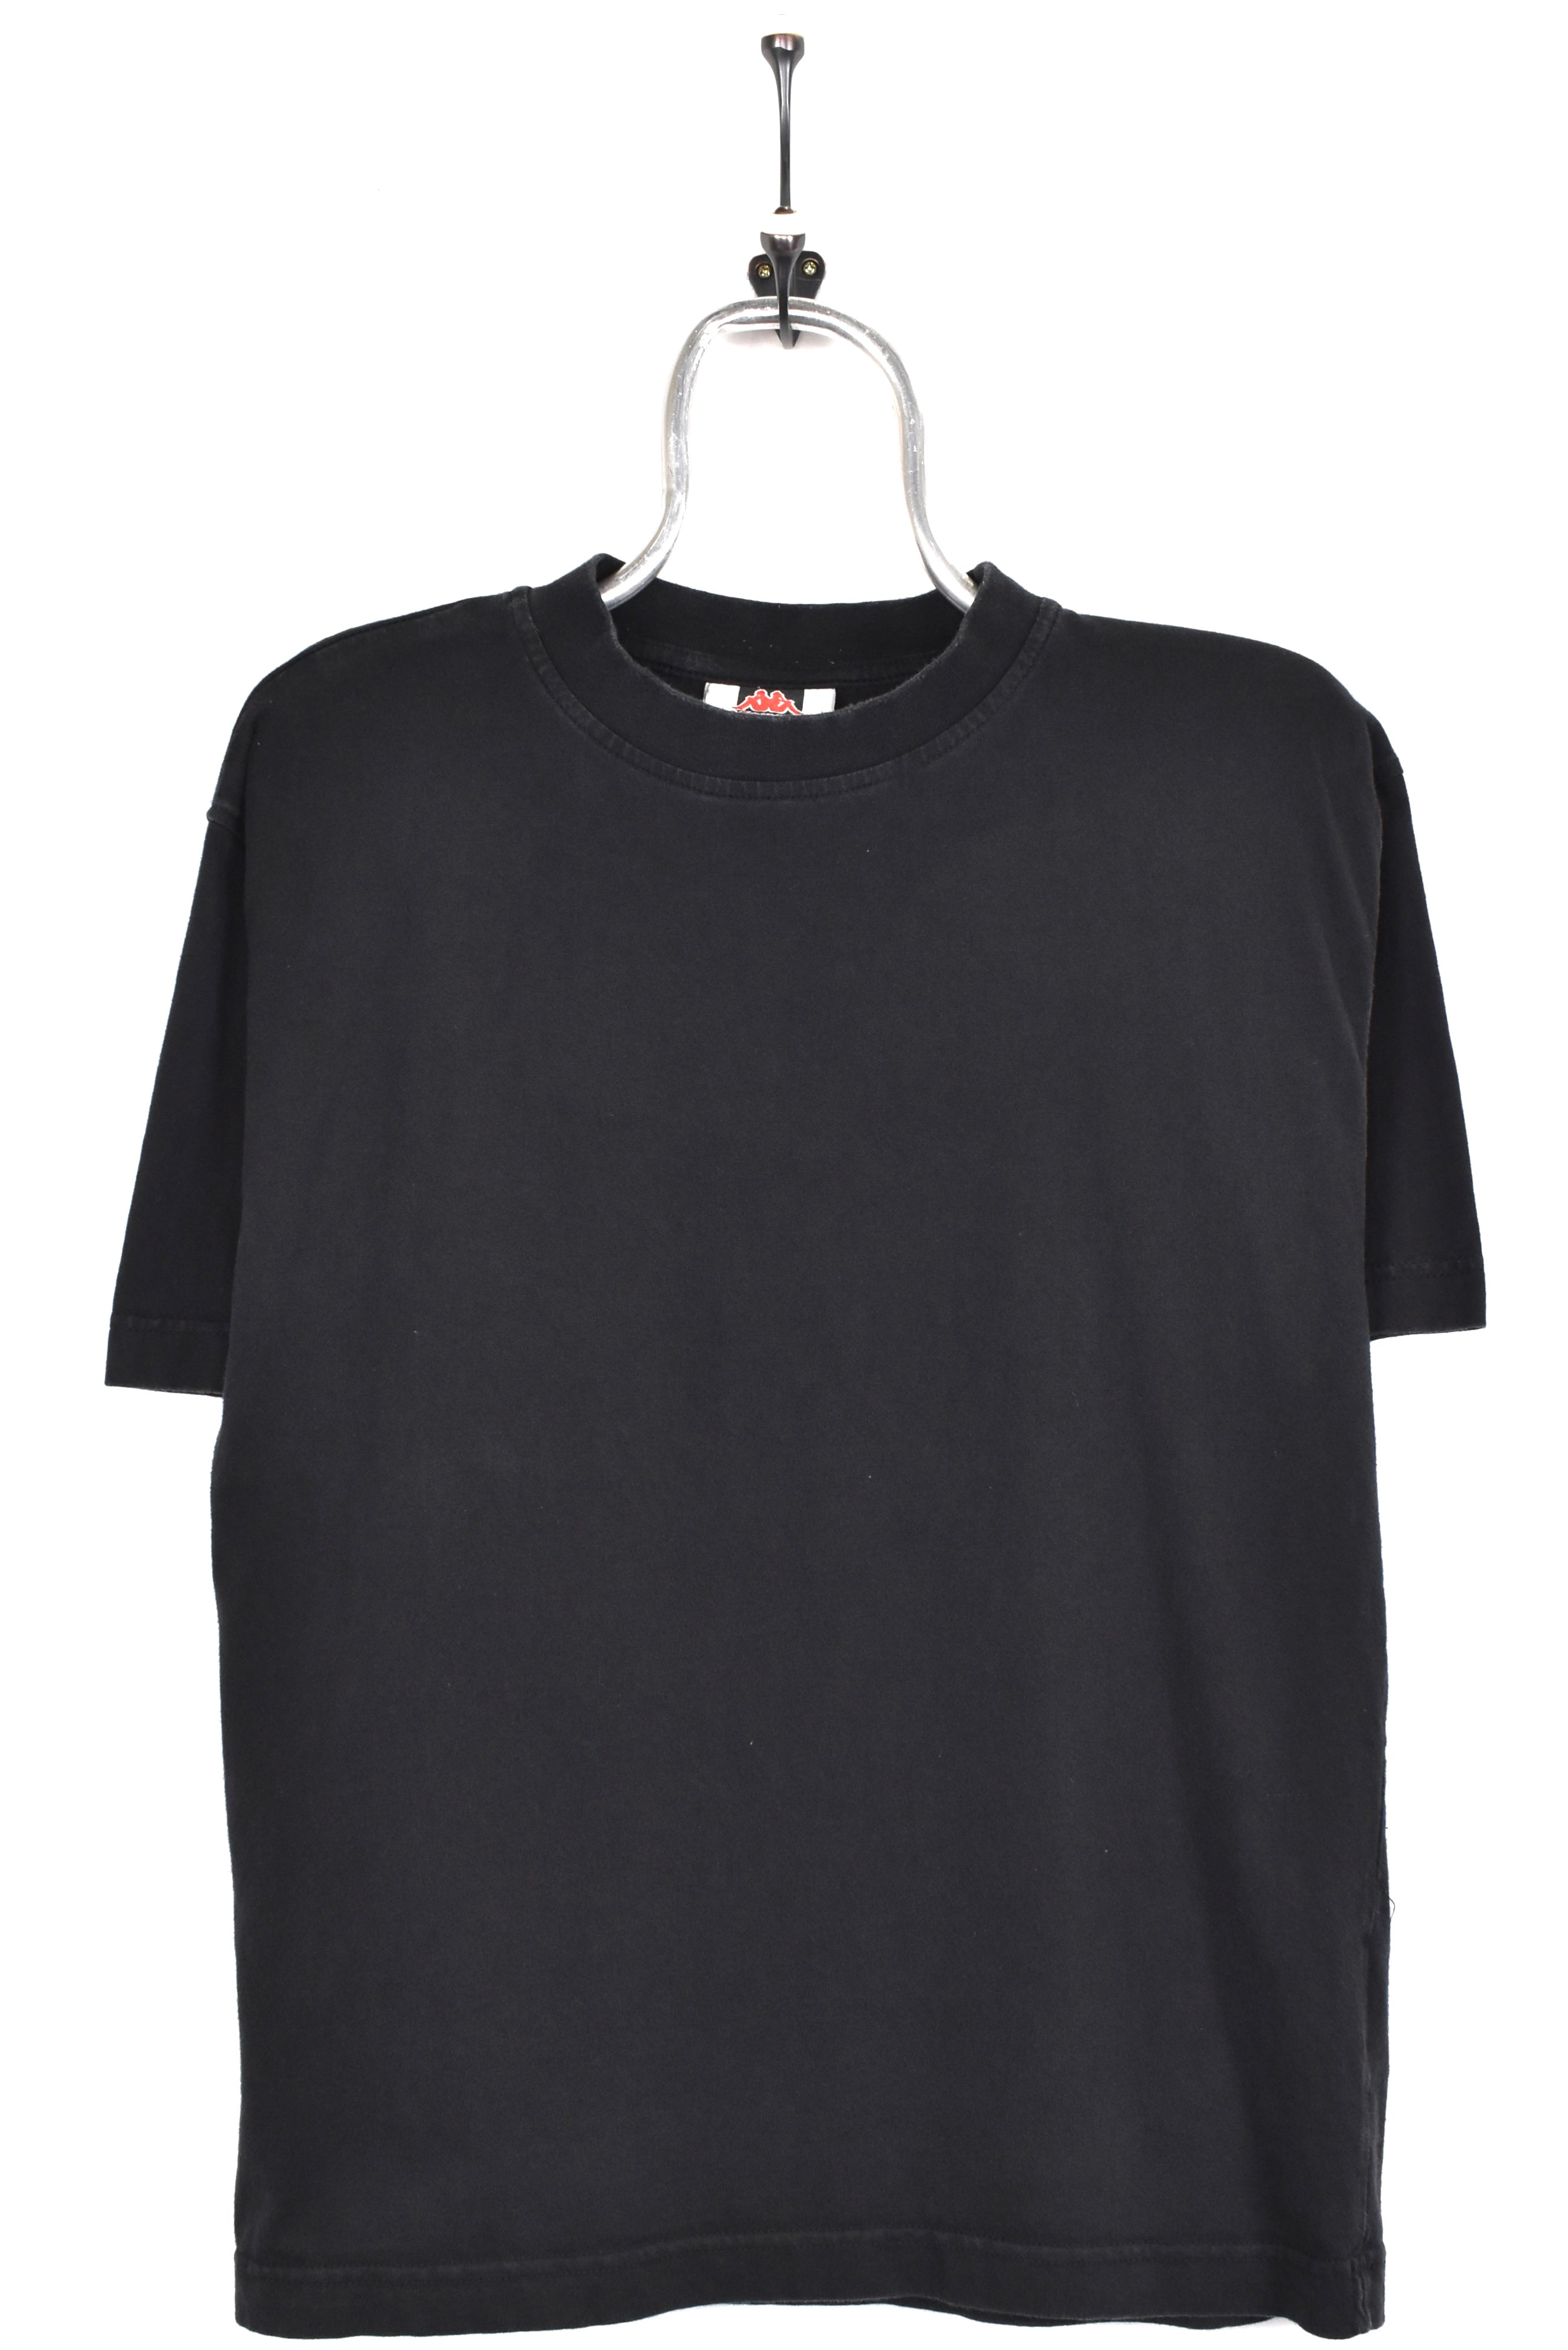 Vintage Kappa shirt, black graphic tee - AU Small KAPPA